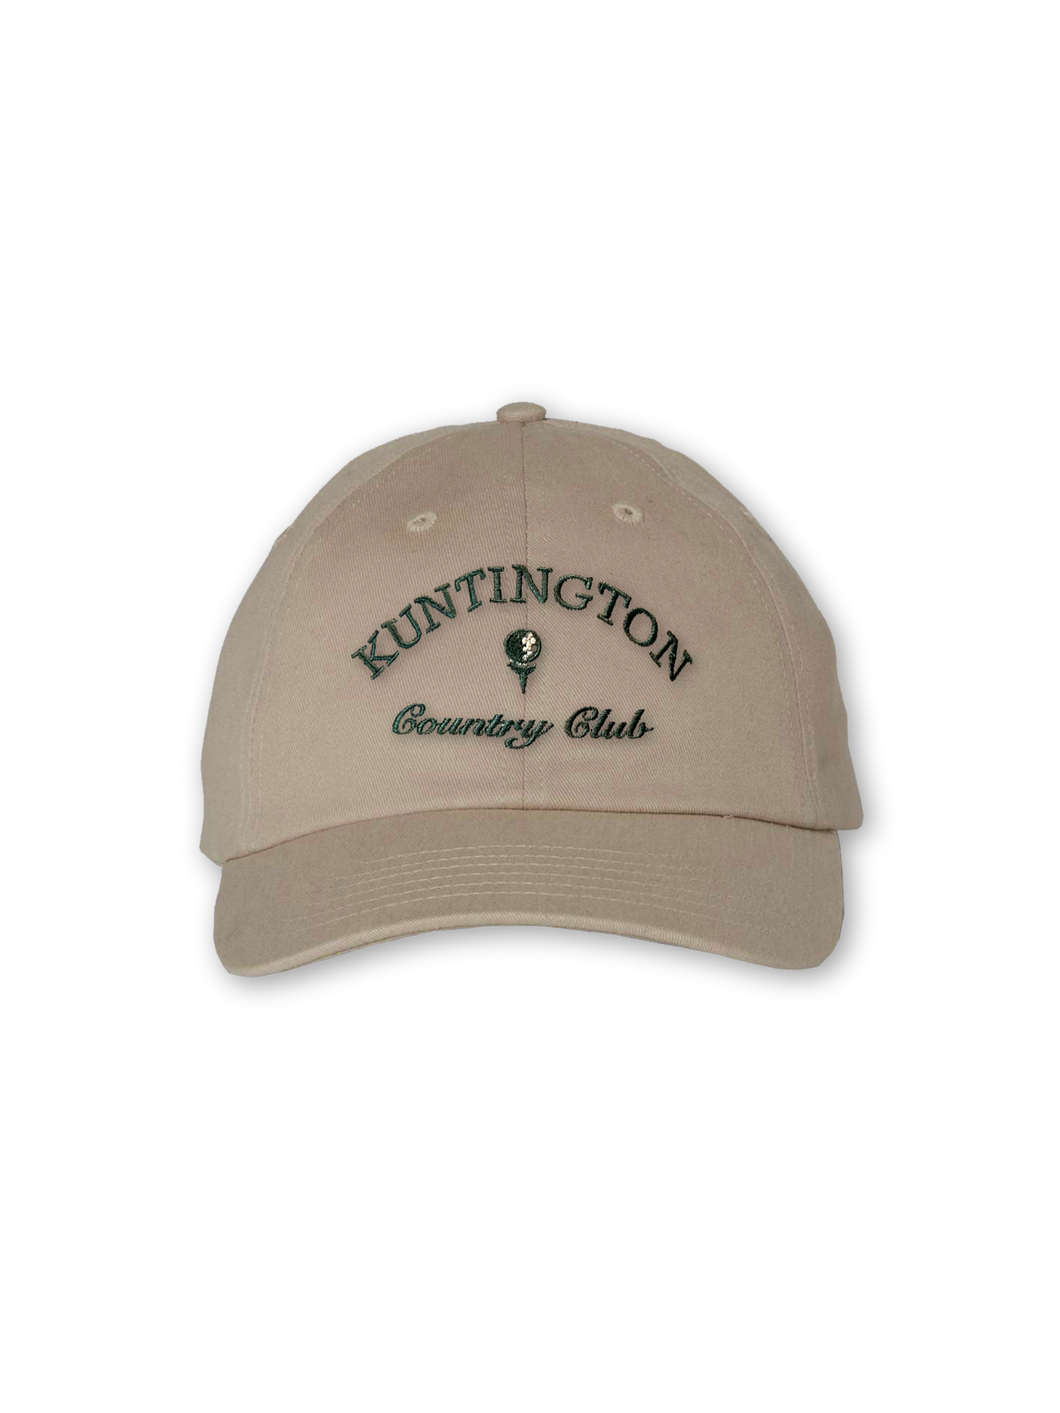 NEW! Limited Edition Khaki Kuntington Country Club Cap